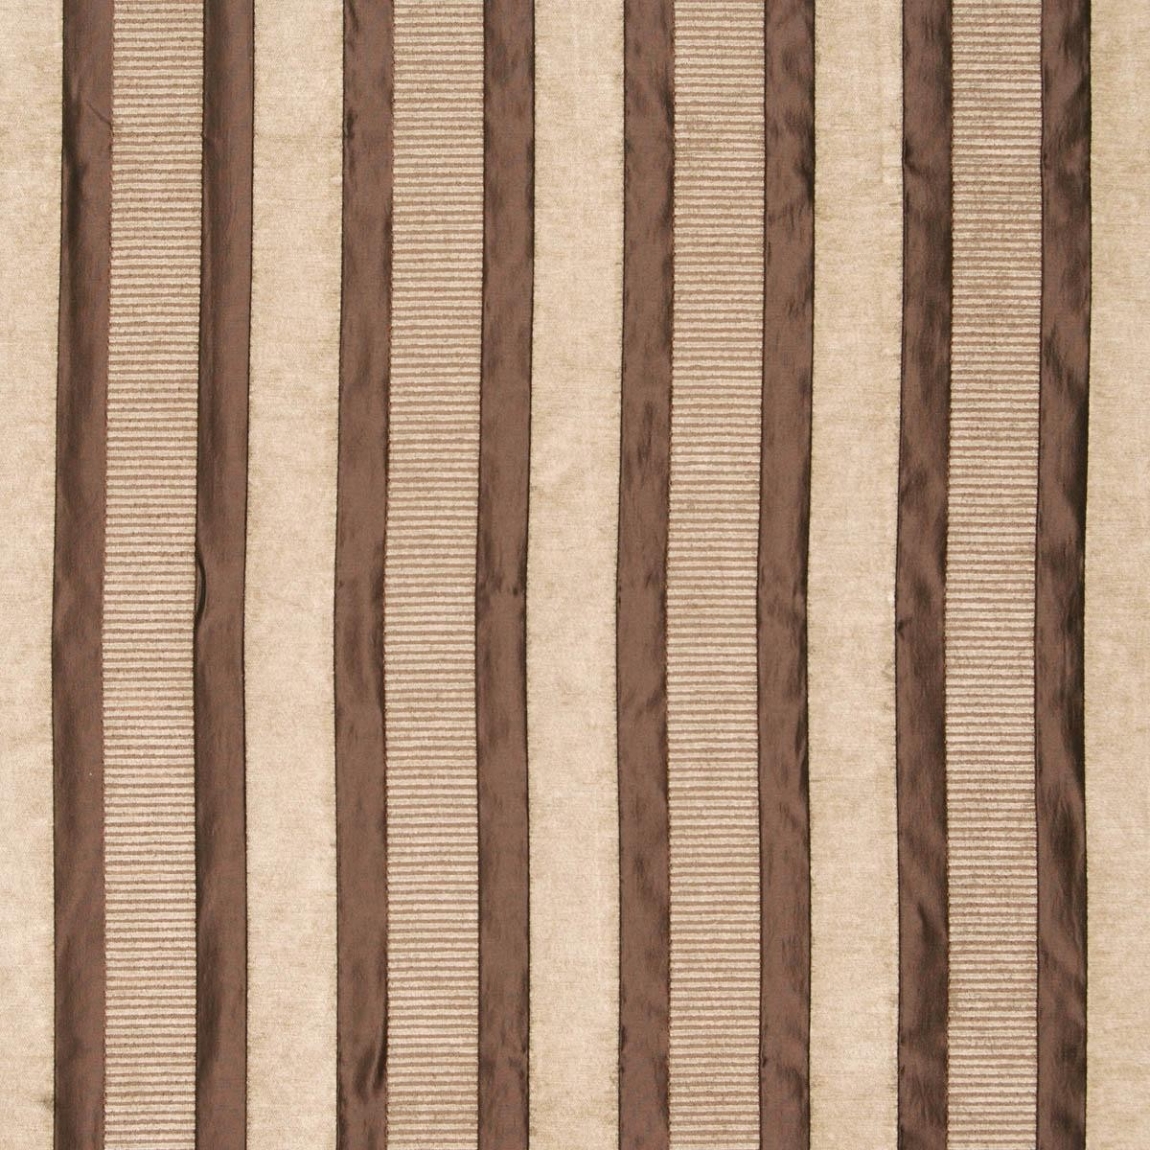 Striped Curtain Fabric  Model : Taipei Fabric Chocolate Stripe Curtain Fabric Curtain Cloth Textile / Curtain Fabric Choose Sample / Pattern Chart